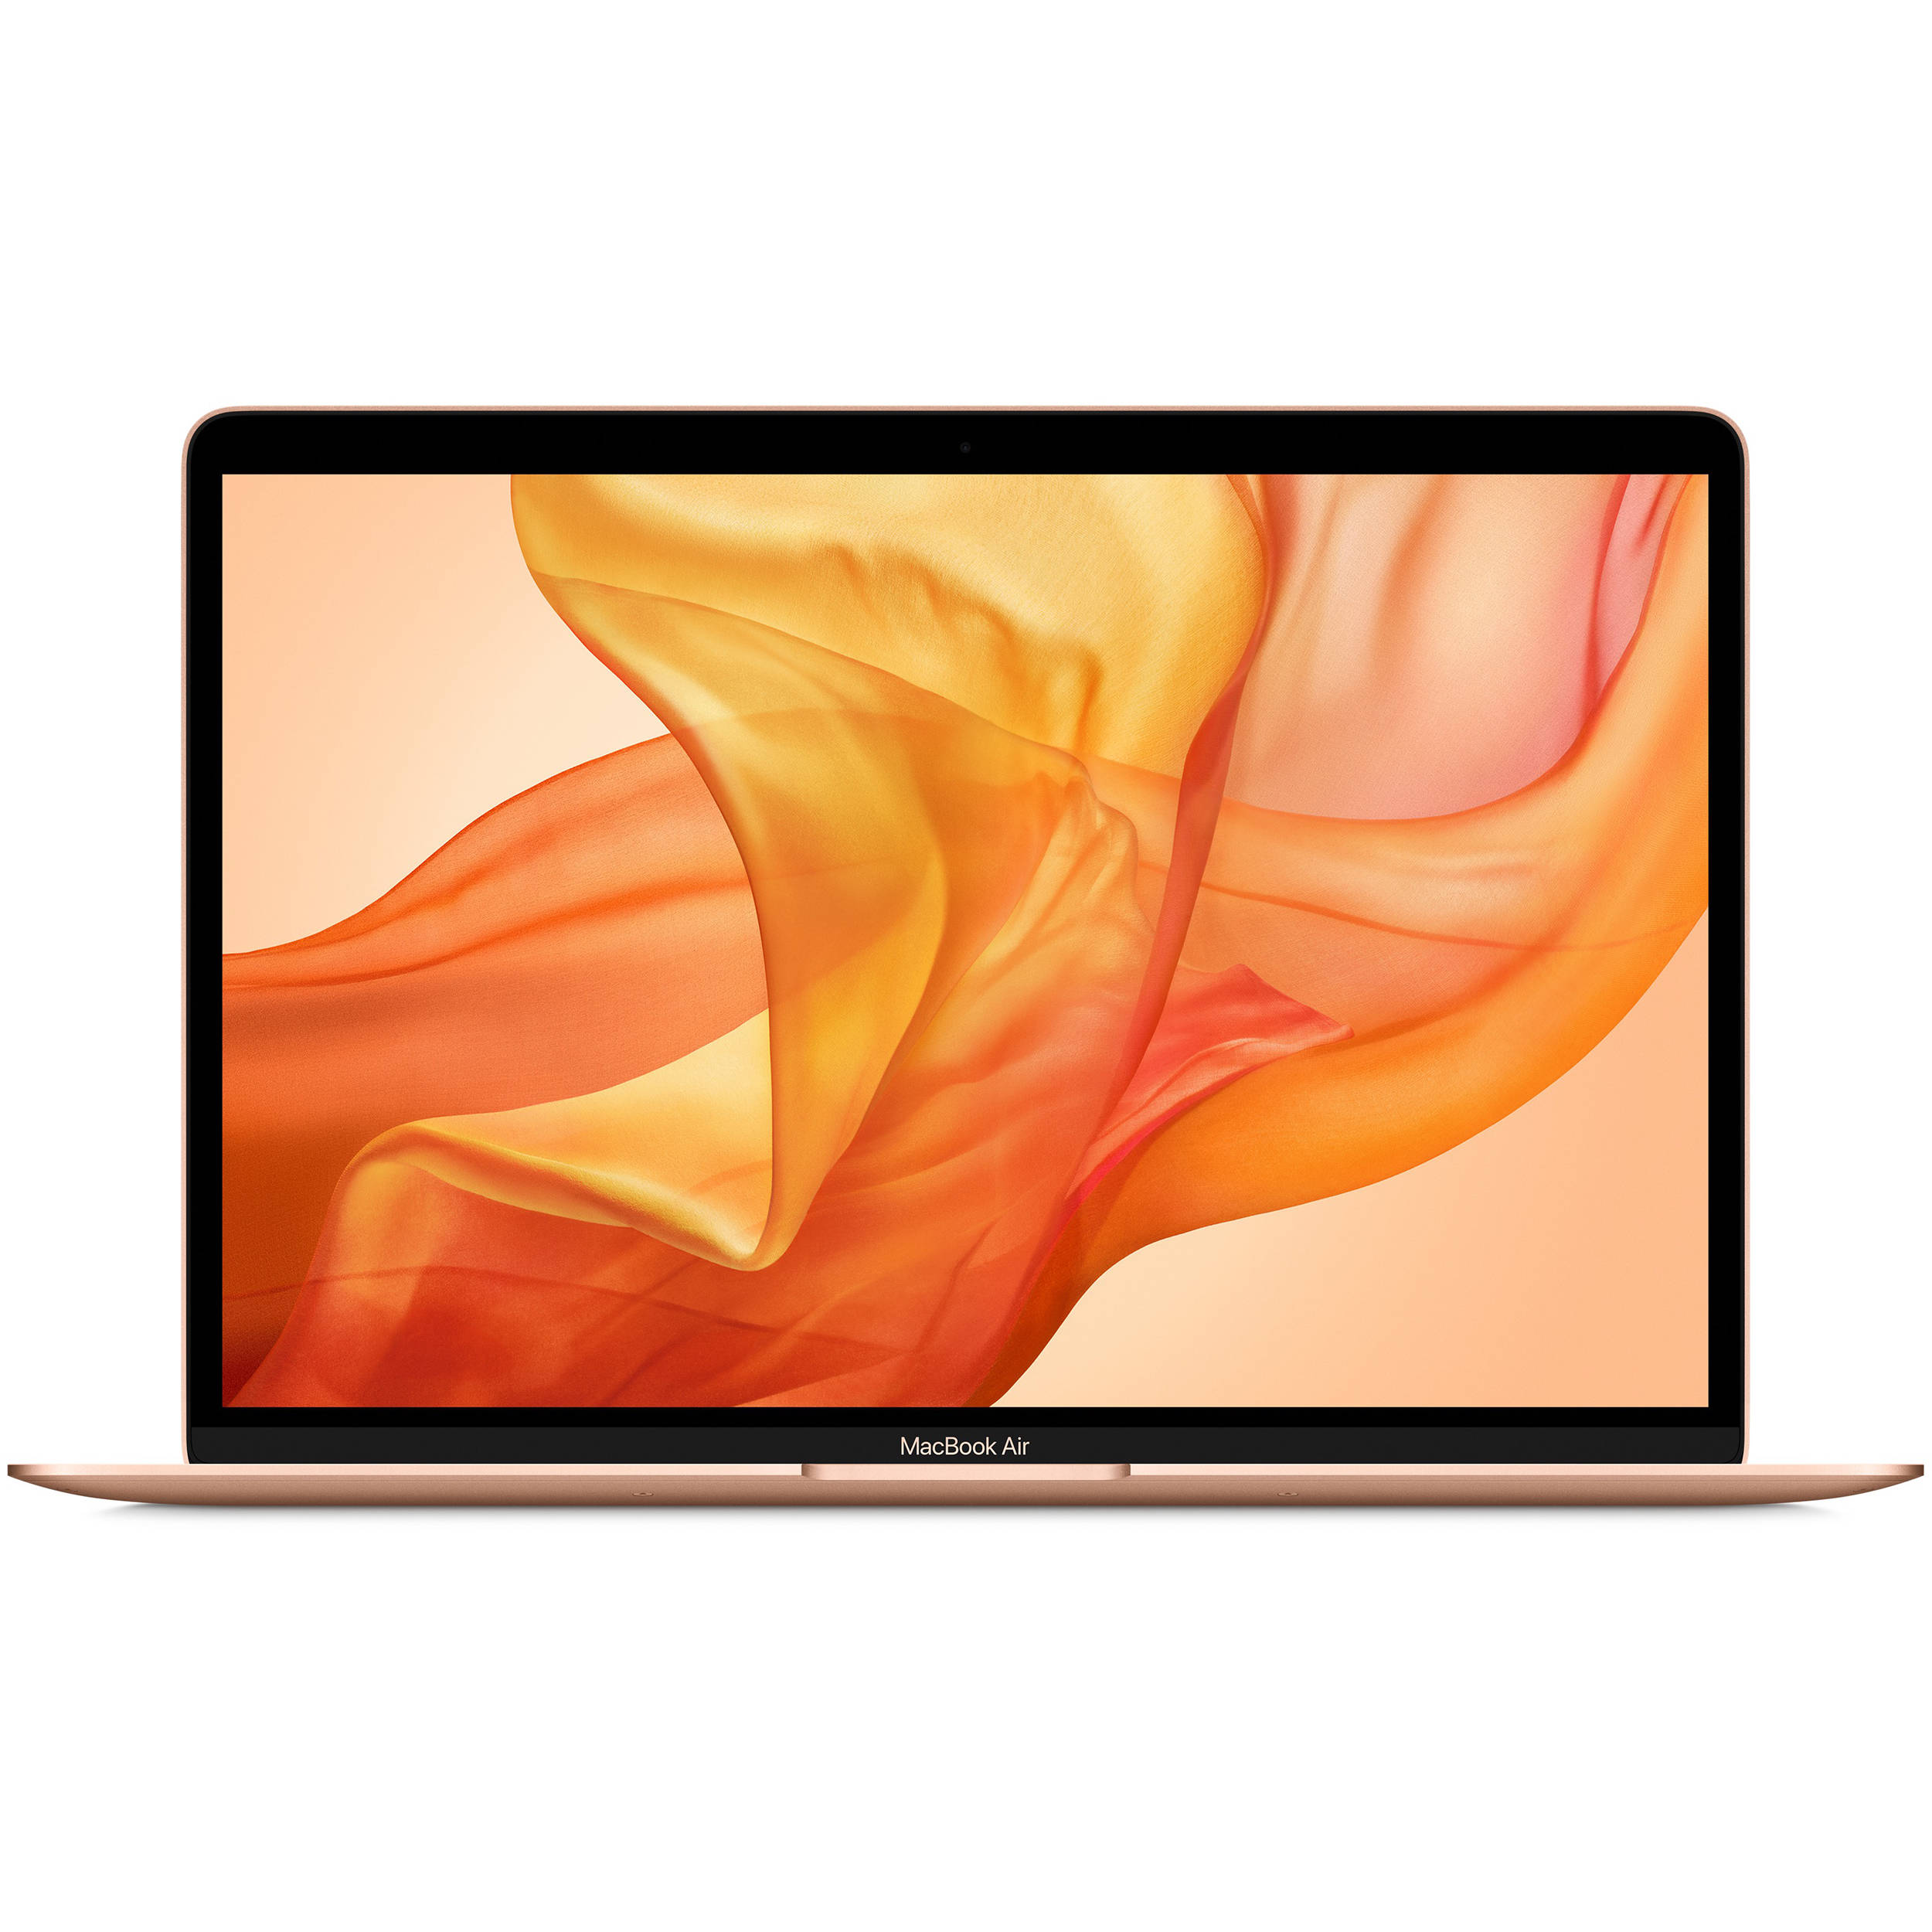 Apple MacBook Air (13-inch, 1.1GHz Quad-core 10th-Generation Intel Core i5 Processor, 8GB RAM, 512GB Storage)